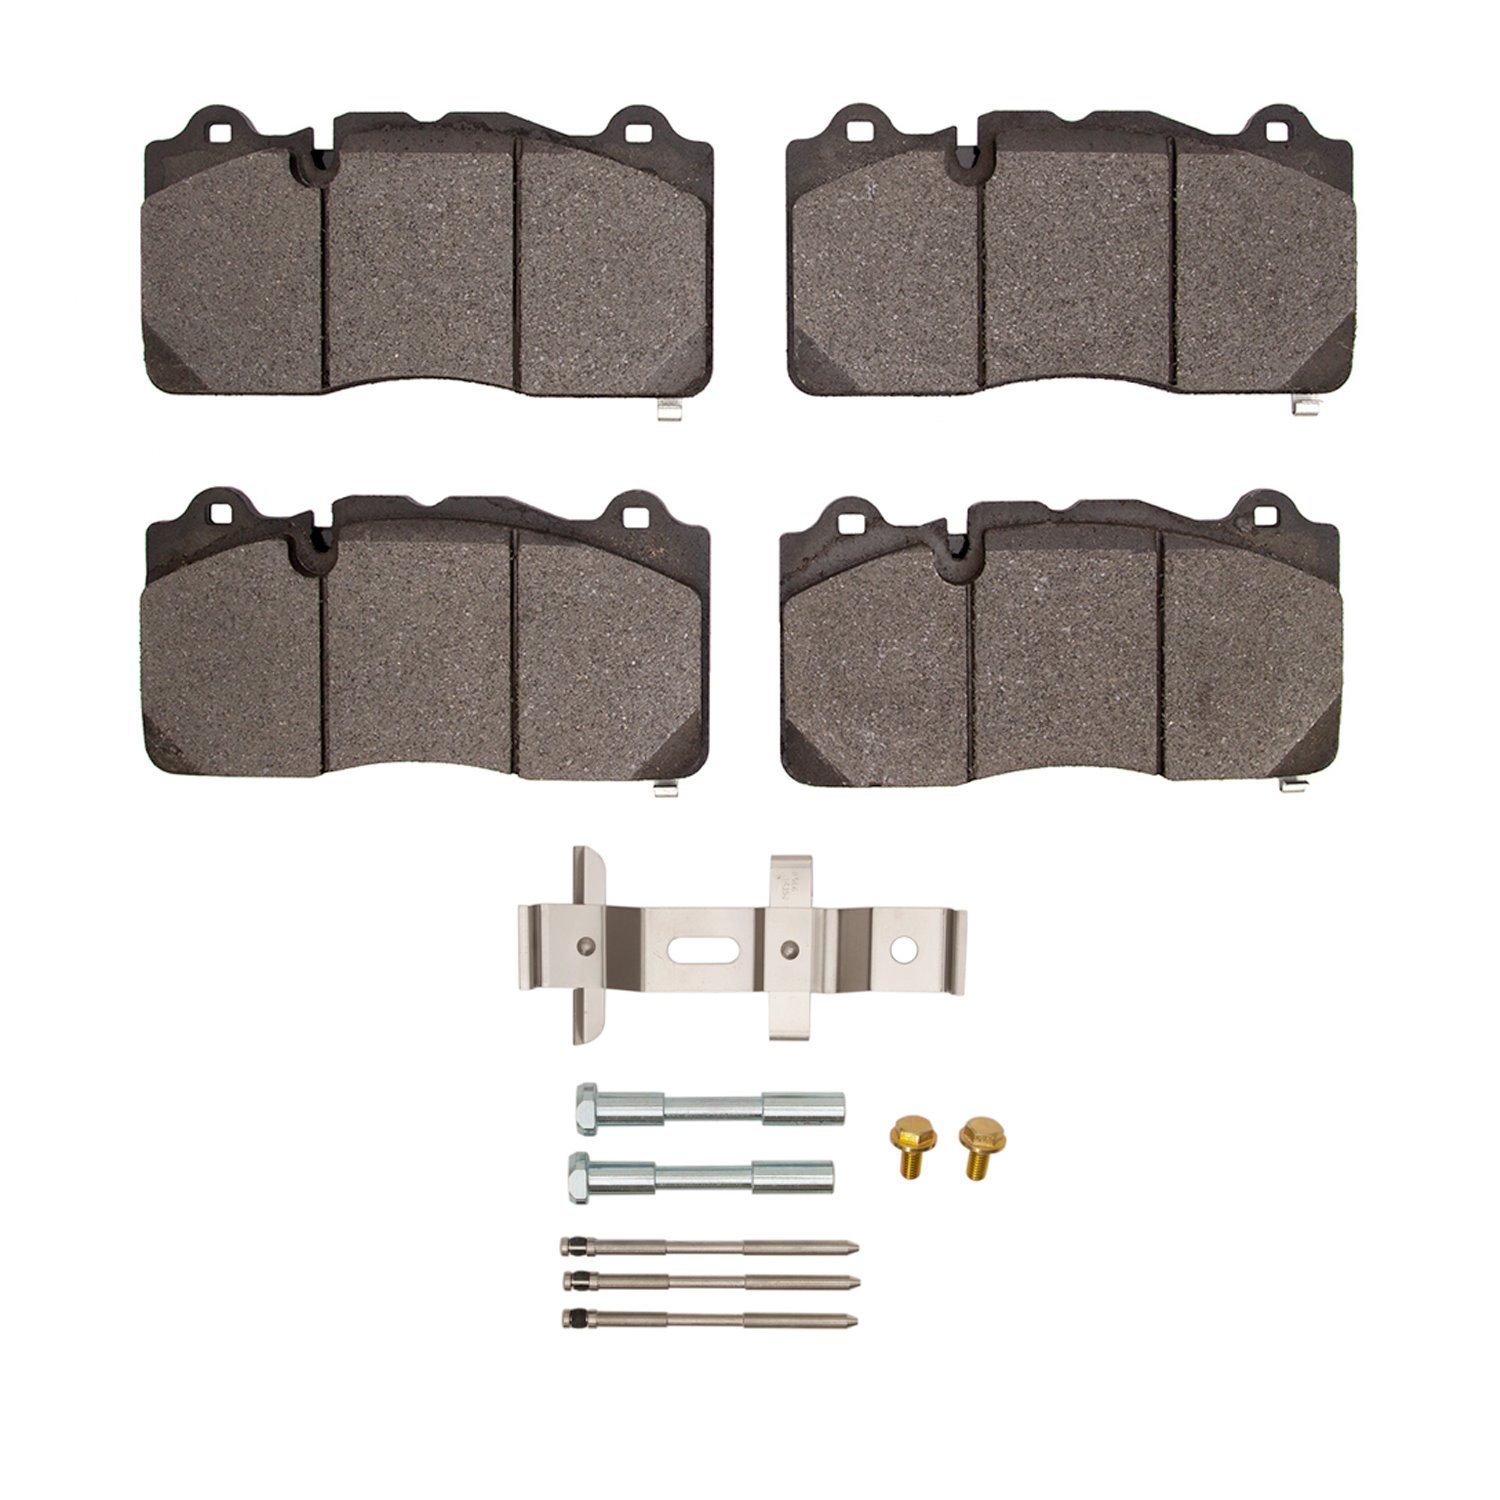 1551-1835-01 5000 Advanced Low-Metallic Brake Pads & Hardware Kit, Fits Select GM, Position: Front